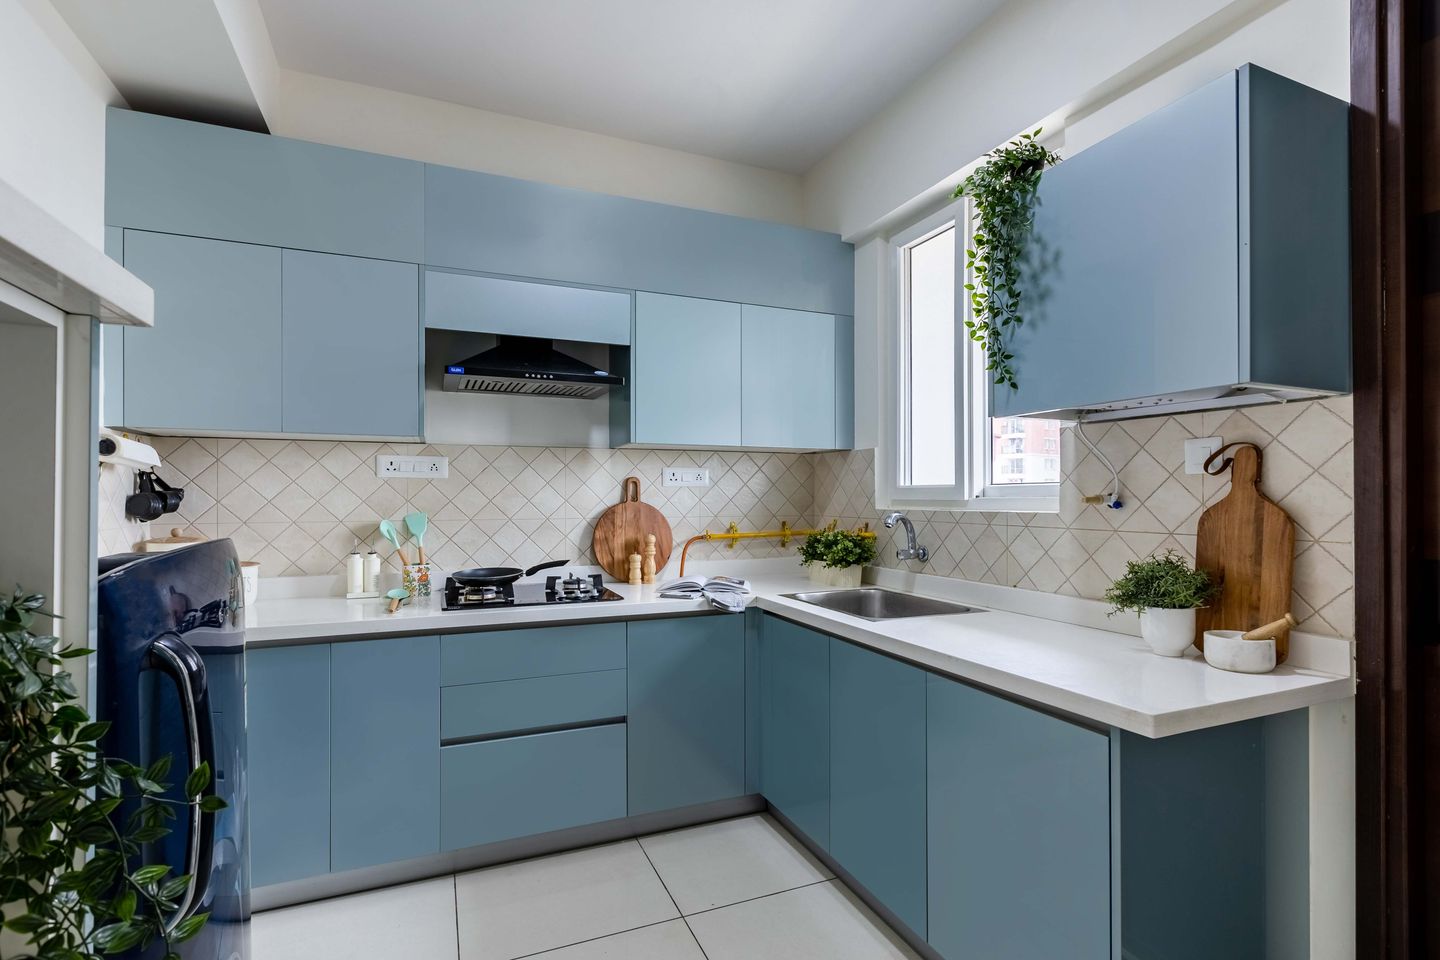 9x6 Ft L-Shaped Kitchen Design With Light Blue Storage Units - Livspace